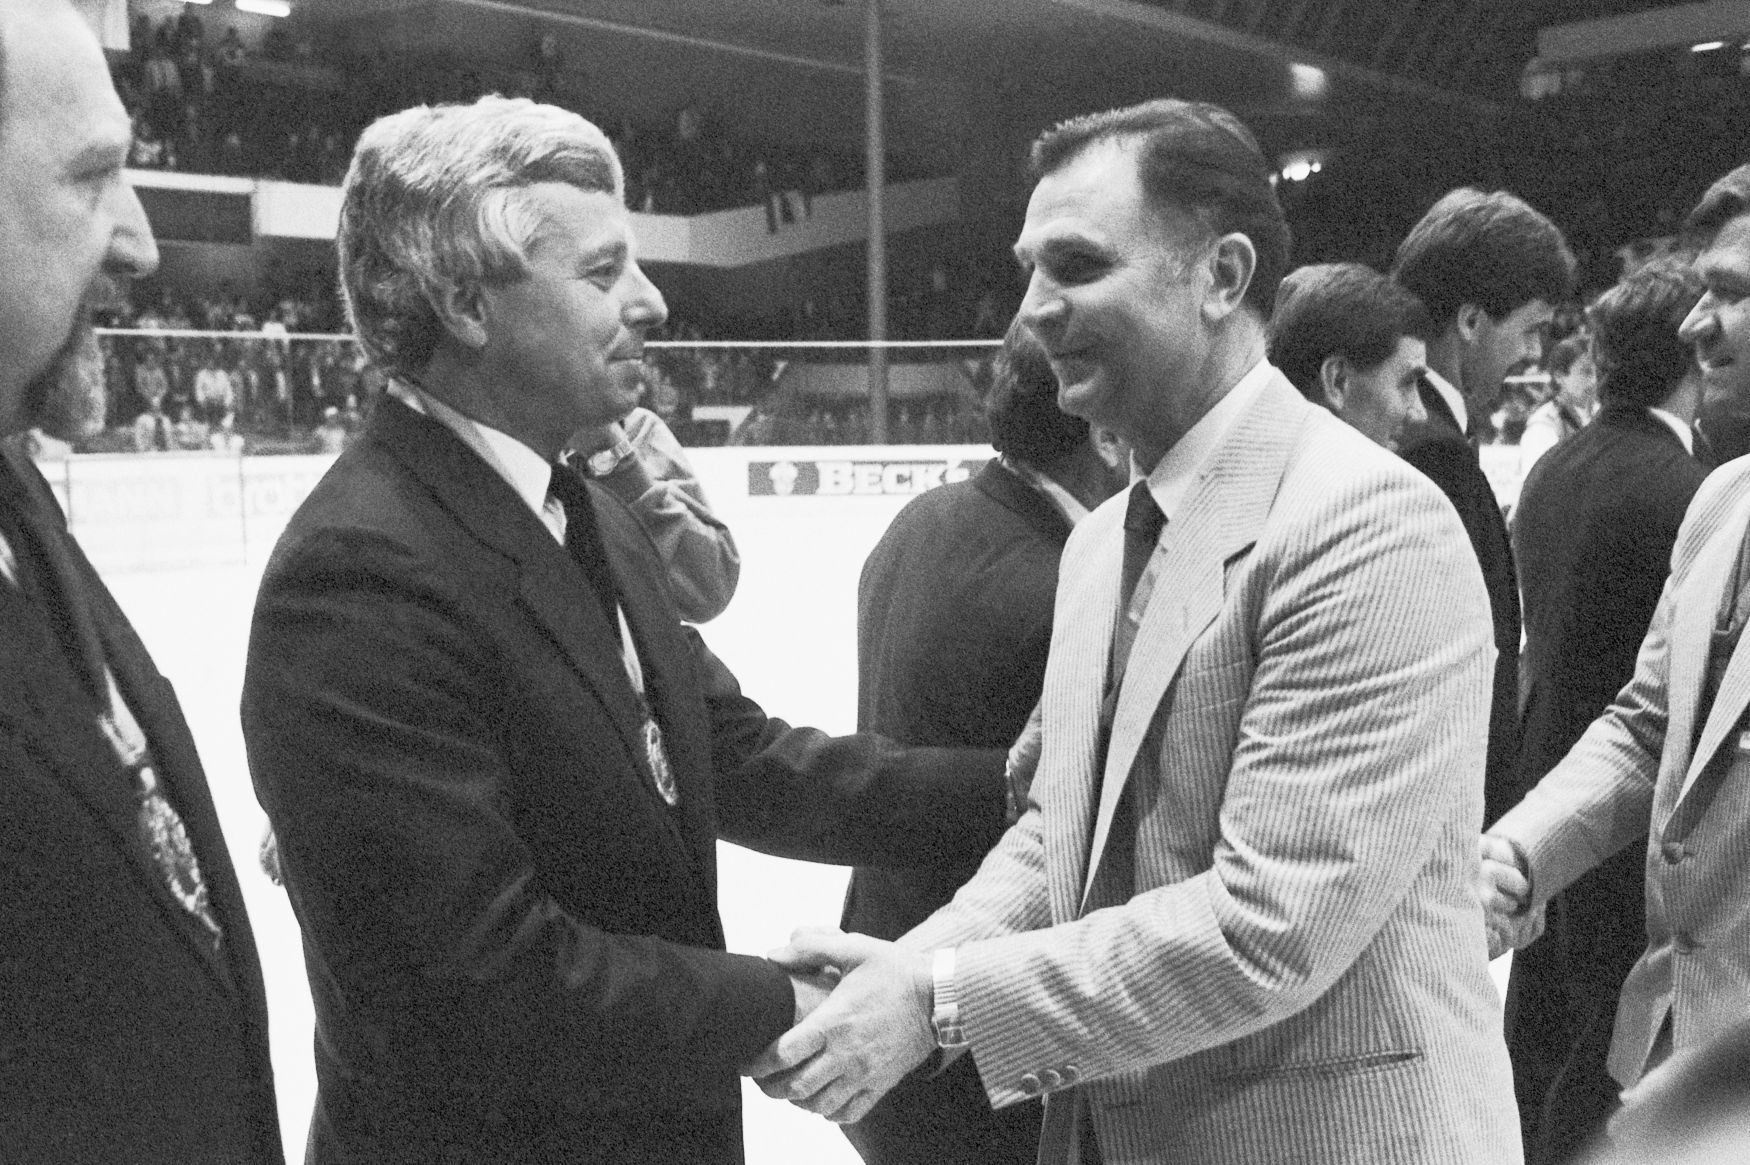 MS v hokeji 1985 v Praze: Trenéři Luděk Bukač (vlevo) a Viktor Tichonov při pozdravu po zápase